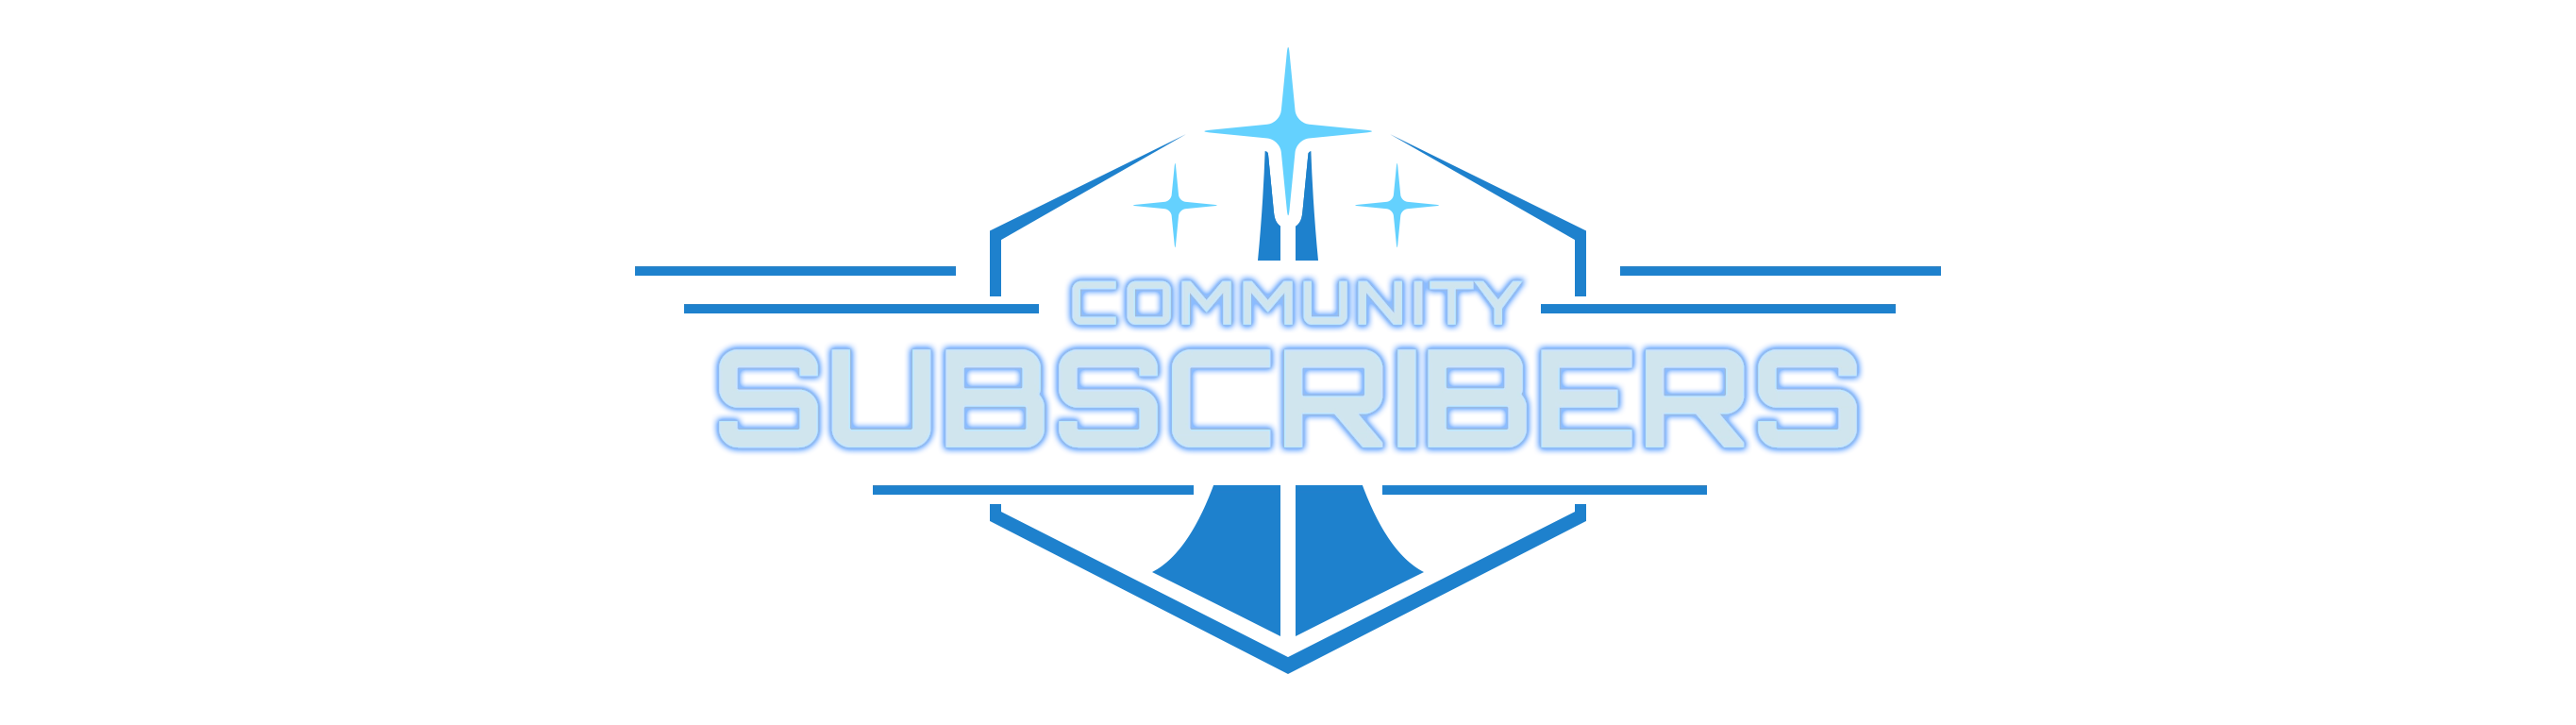 Subscribers logo community 32 9